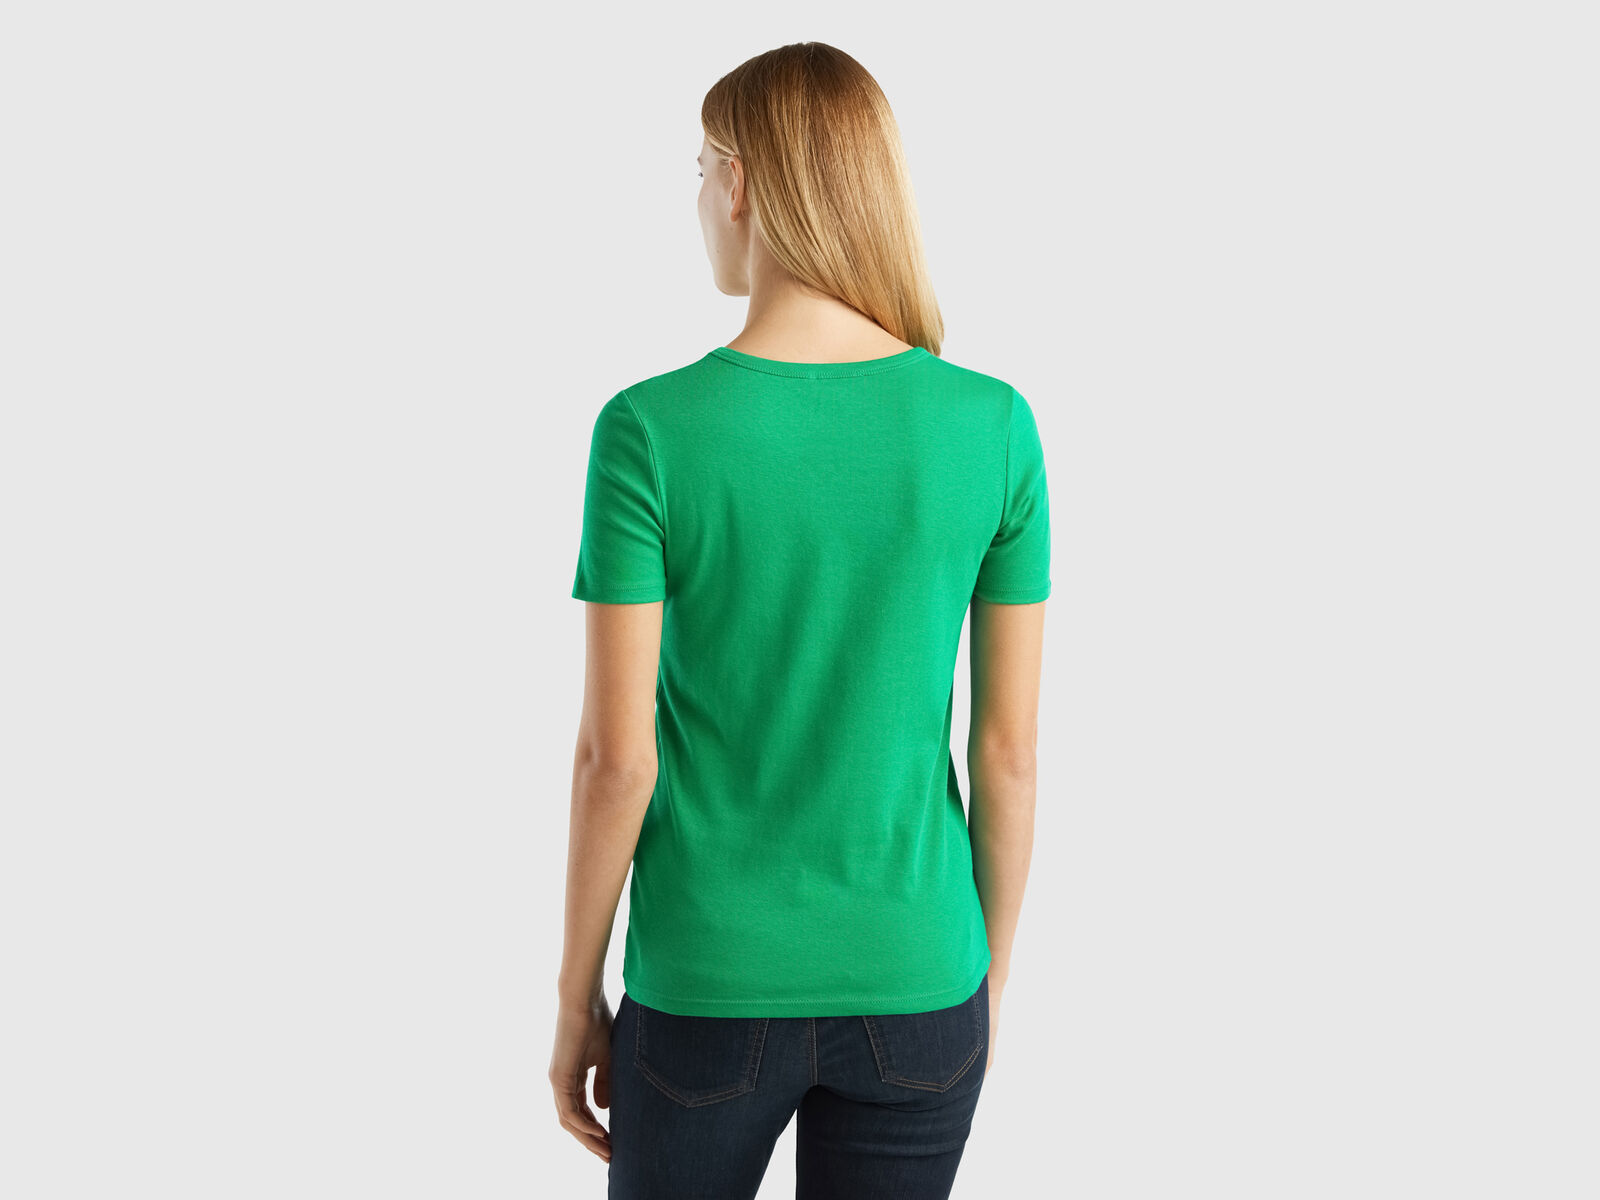 T-shirt in 100% cotton | glitter print Green with logo - Benetton